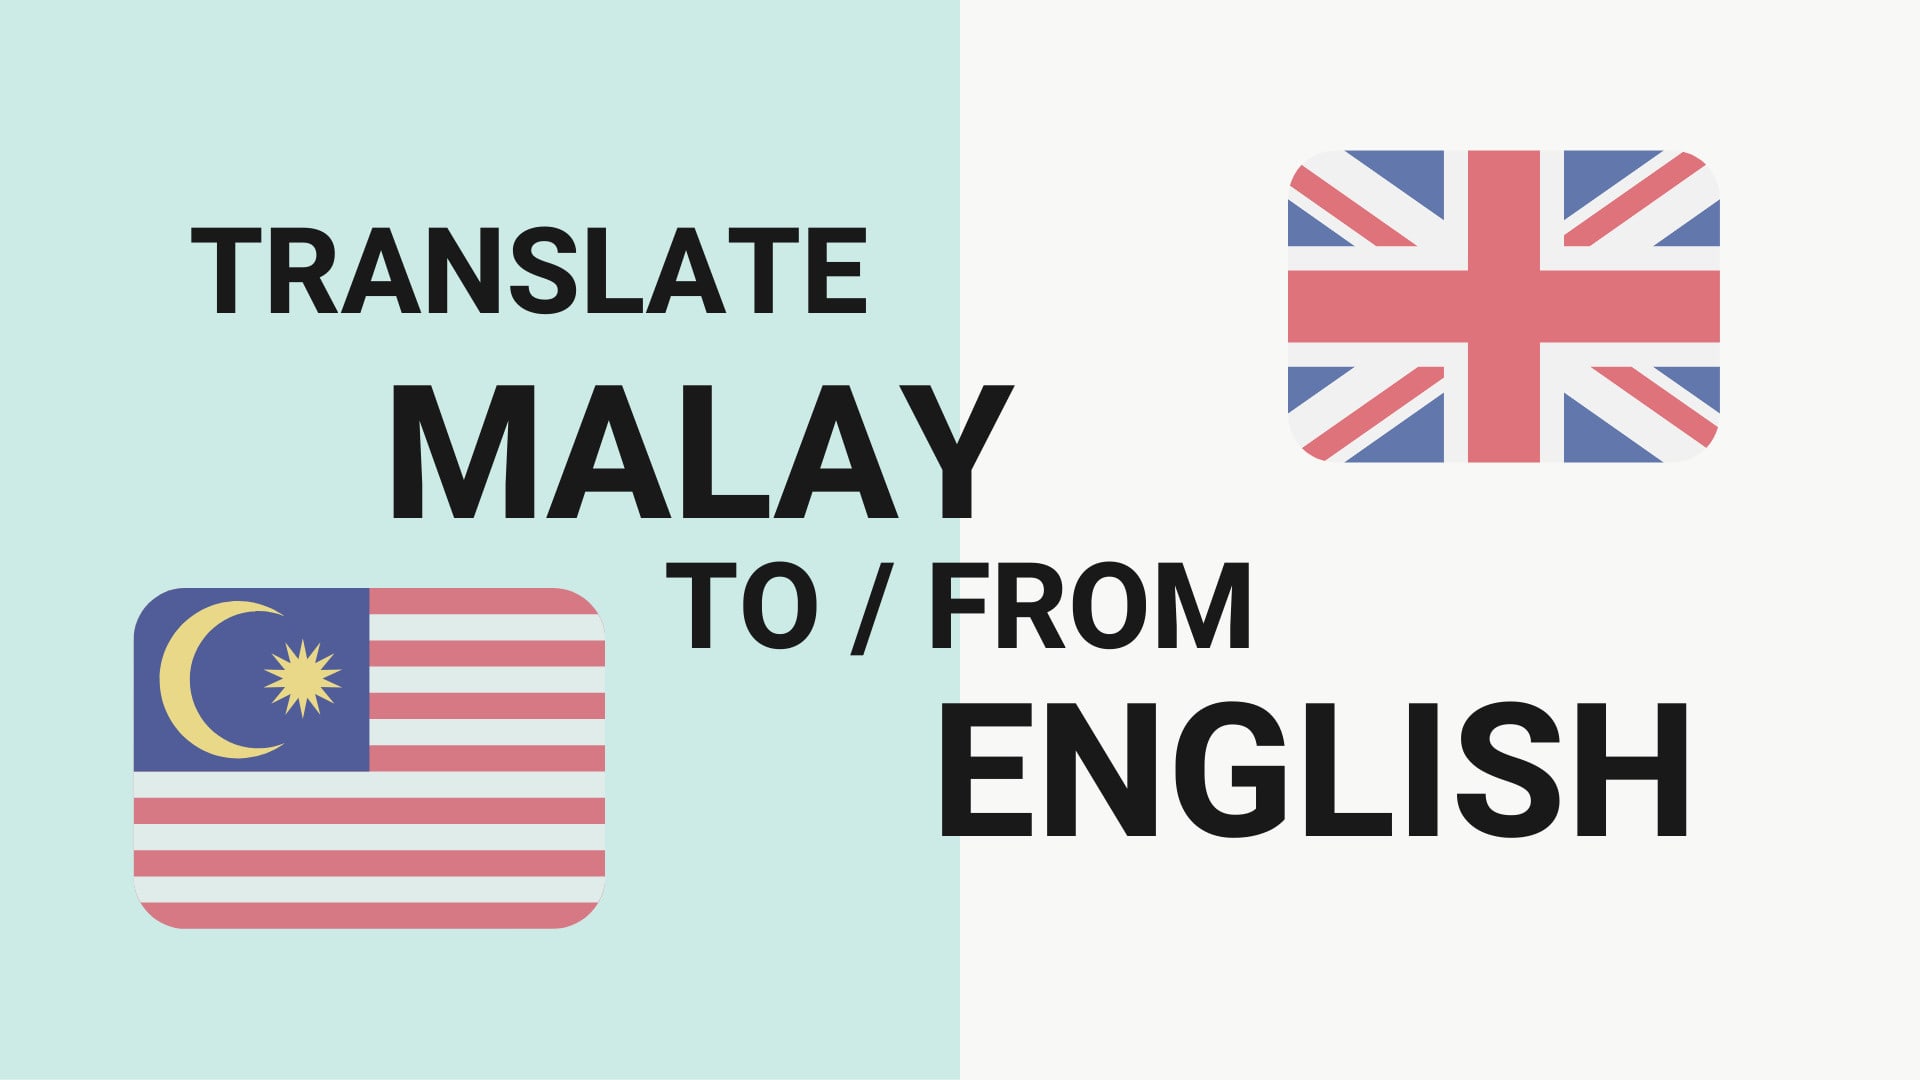 Malay translate Malay to